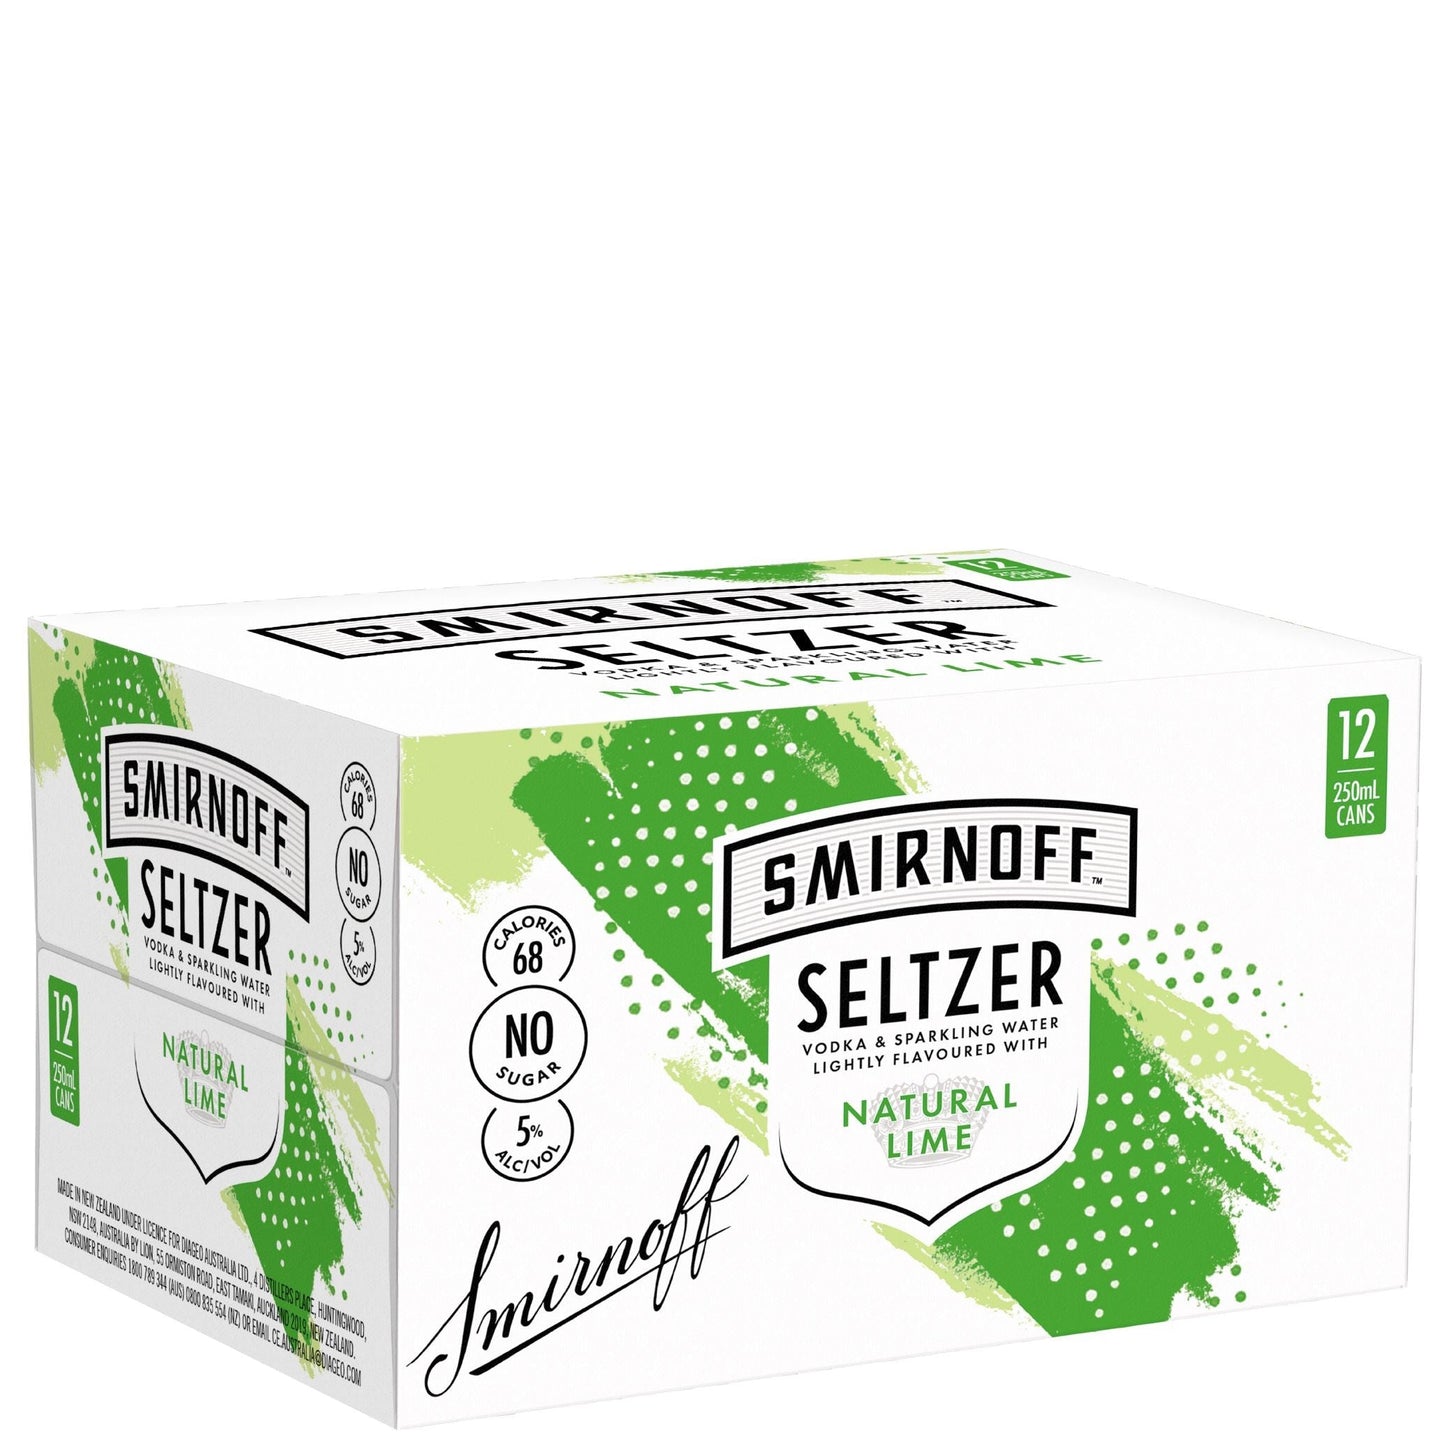 Smirnoff Seltzer Natural Lime - 12pk Cans